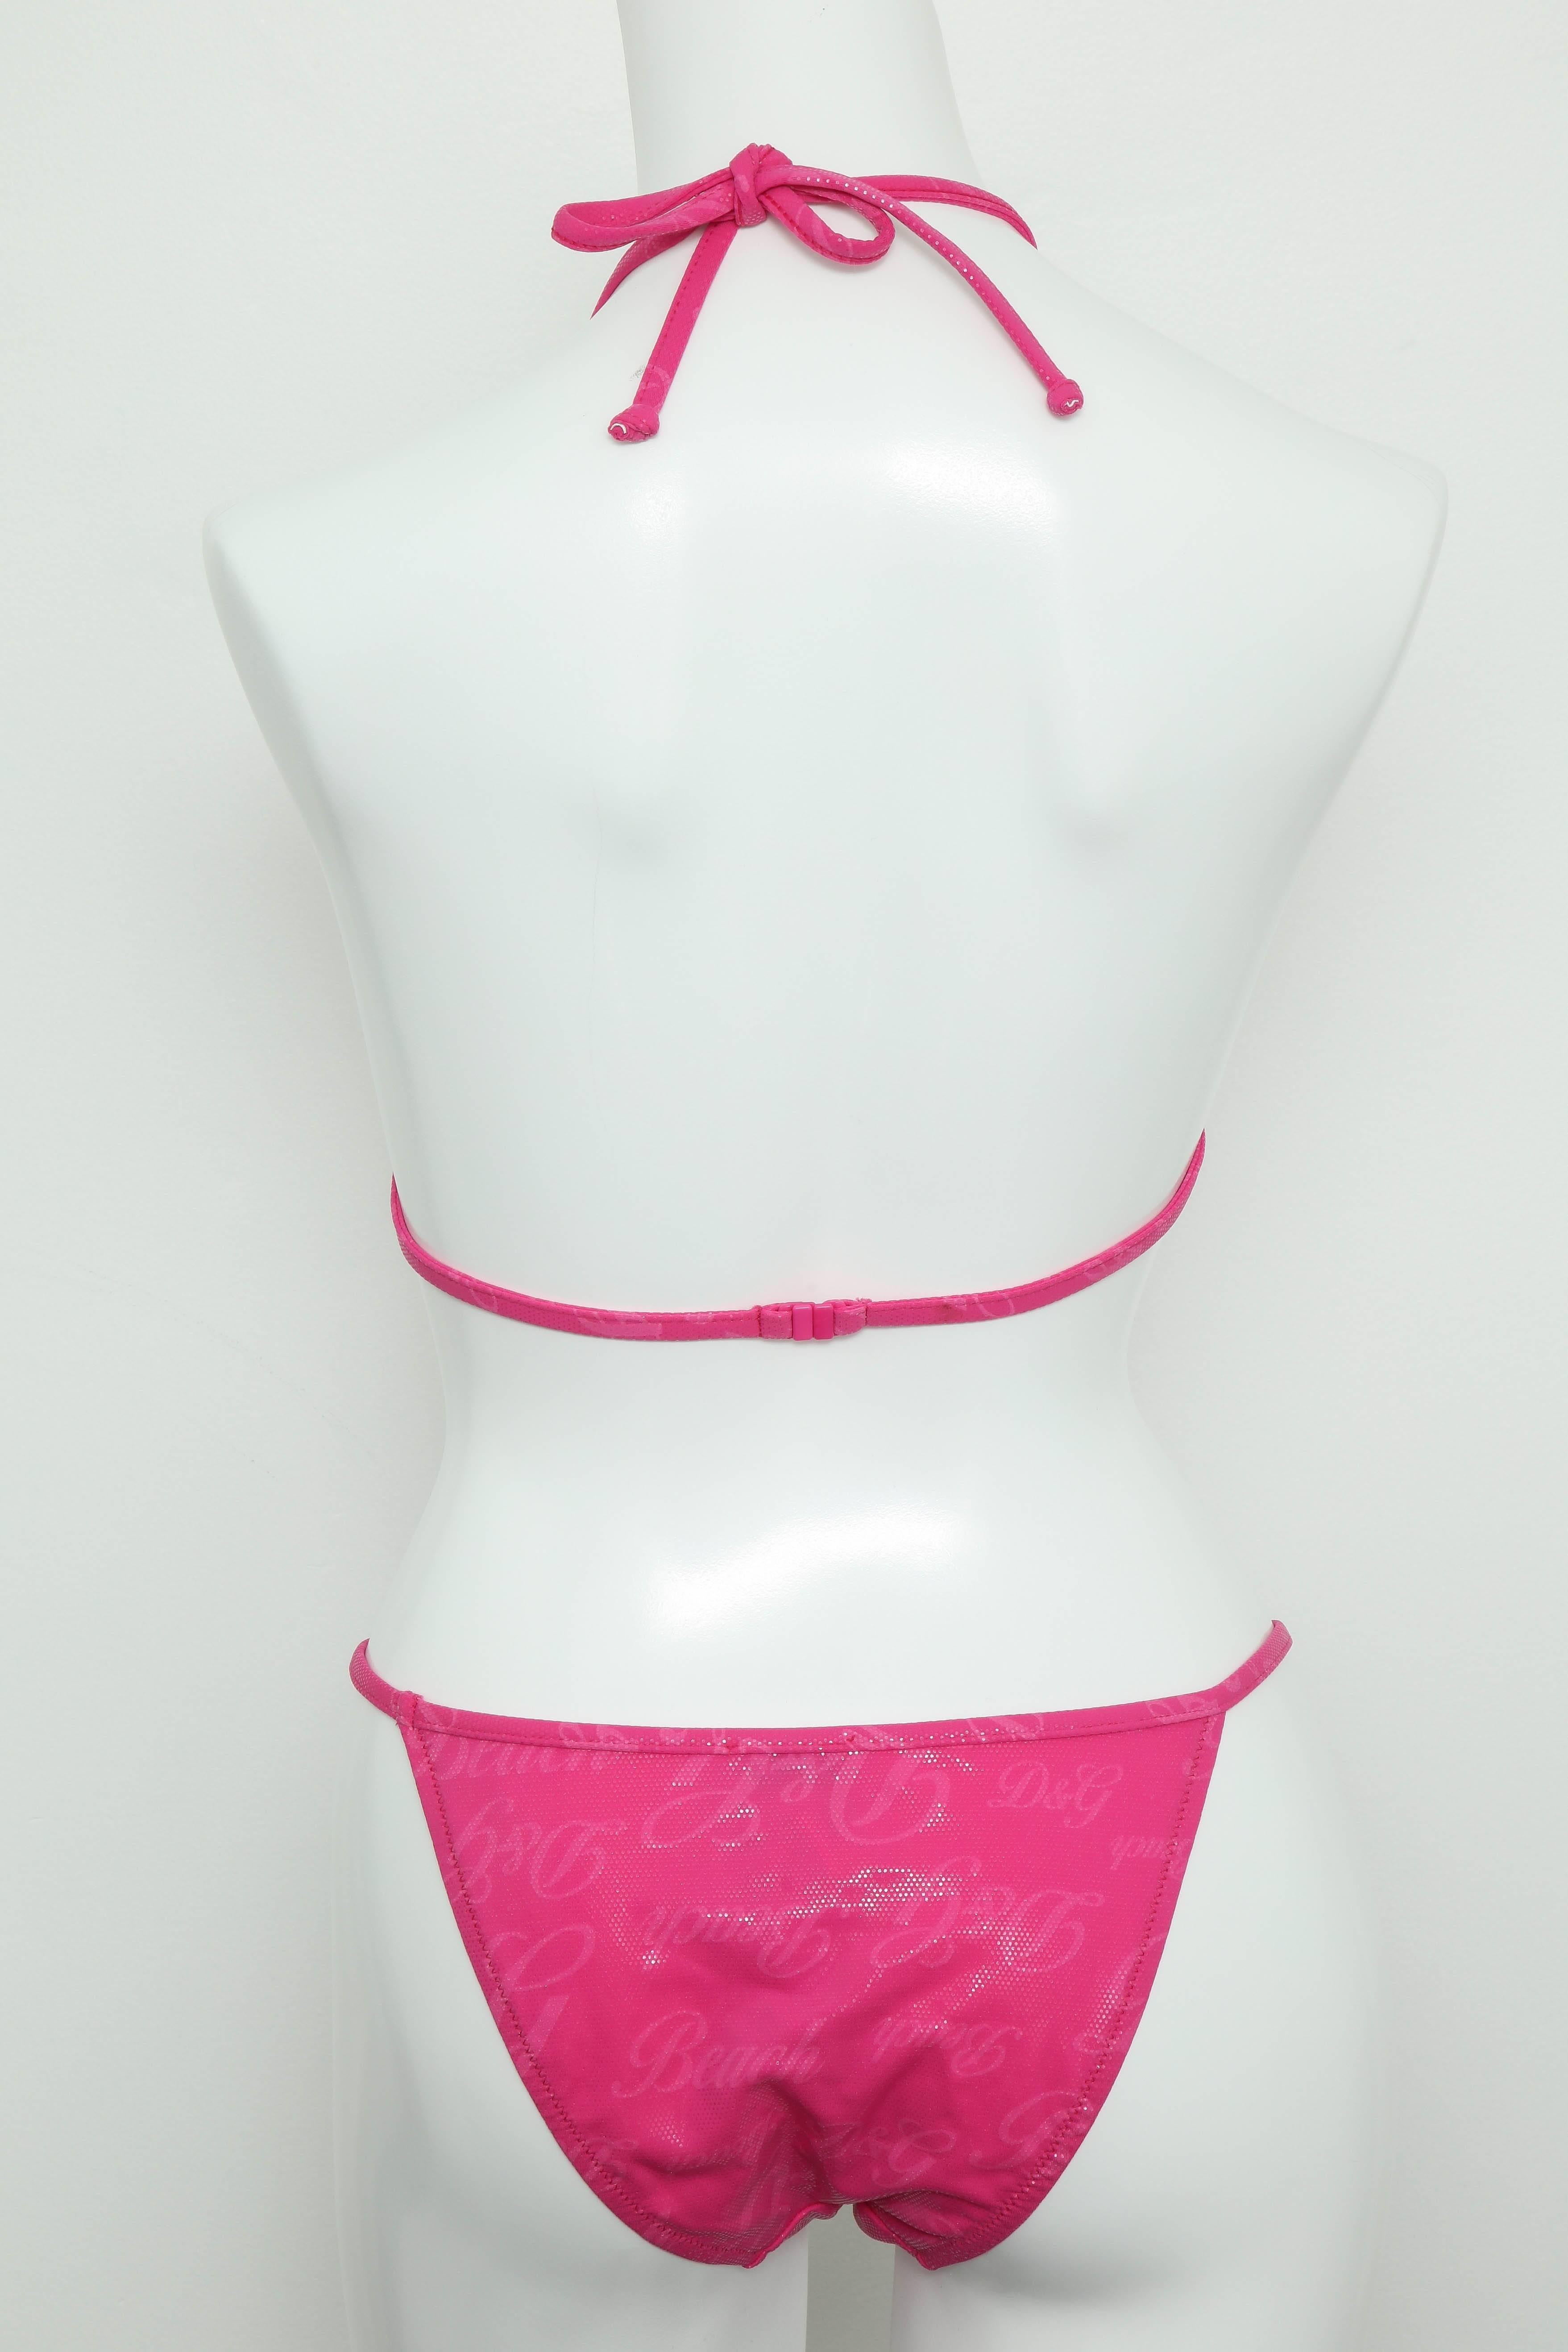 D&G Dolce & Gabbana Pink Bikini Swimwear  In Excellent Condition For Sale In Chicago, IL